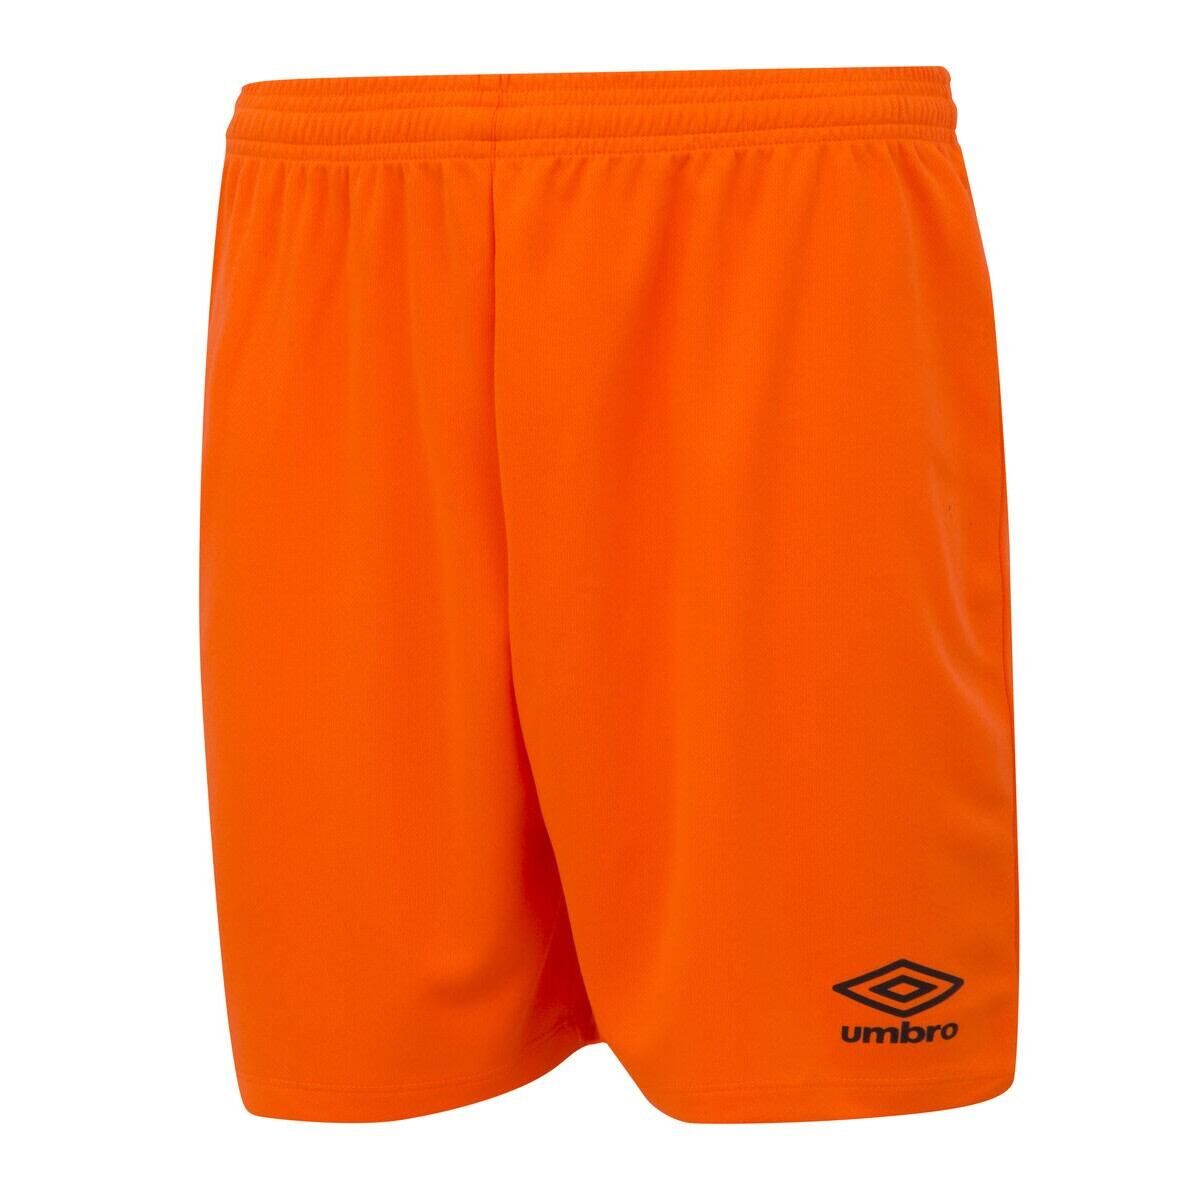 UMBRO Childrens/Kids Club II Shorts (Shocking Orange)